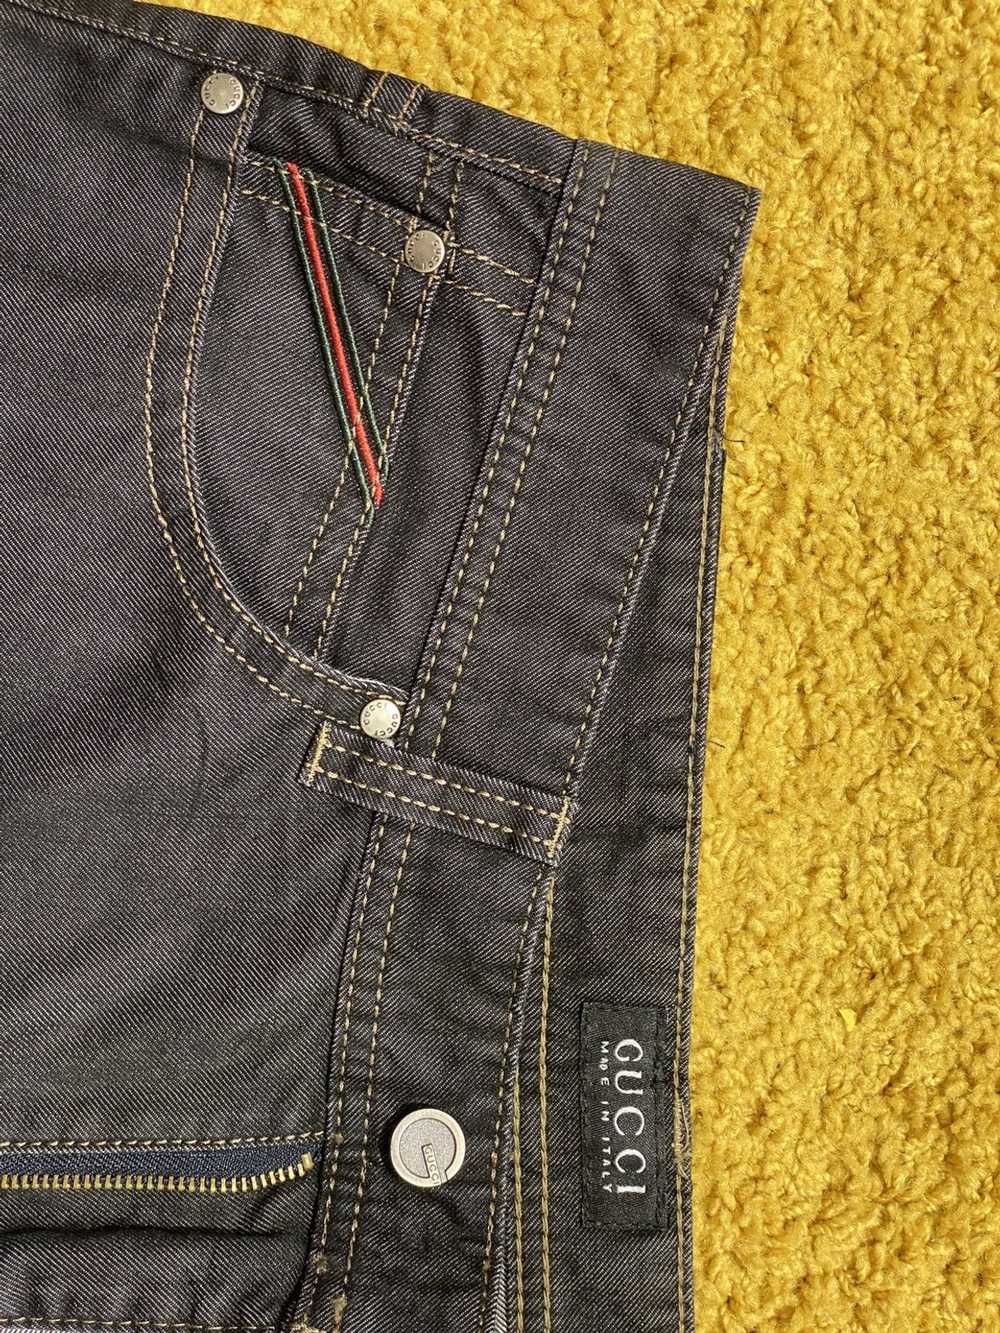 Gucci × Vintage Gucci ligth dark jeans - image 4